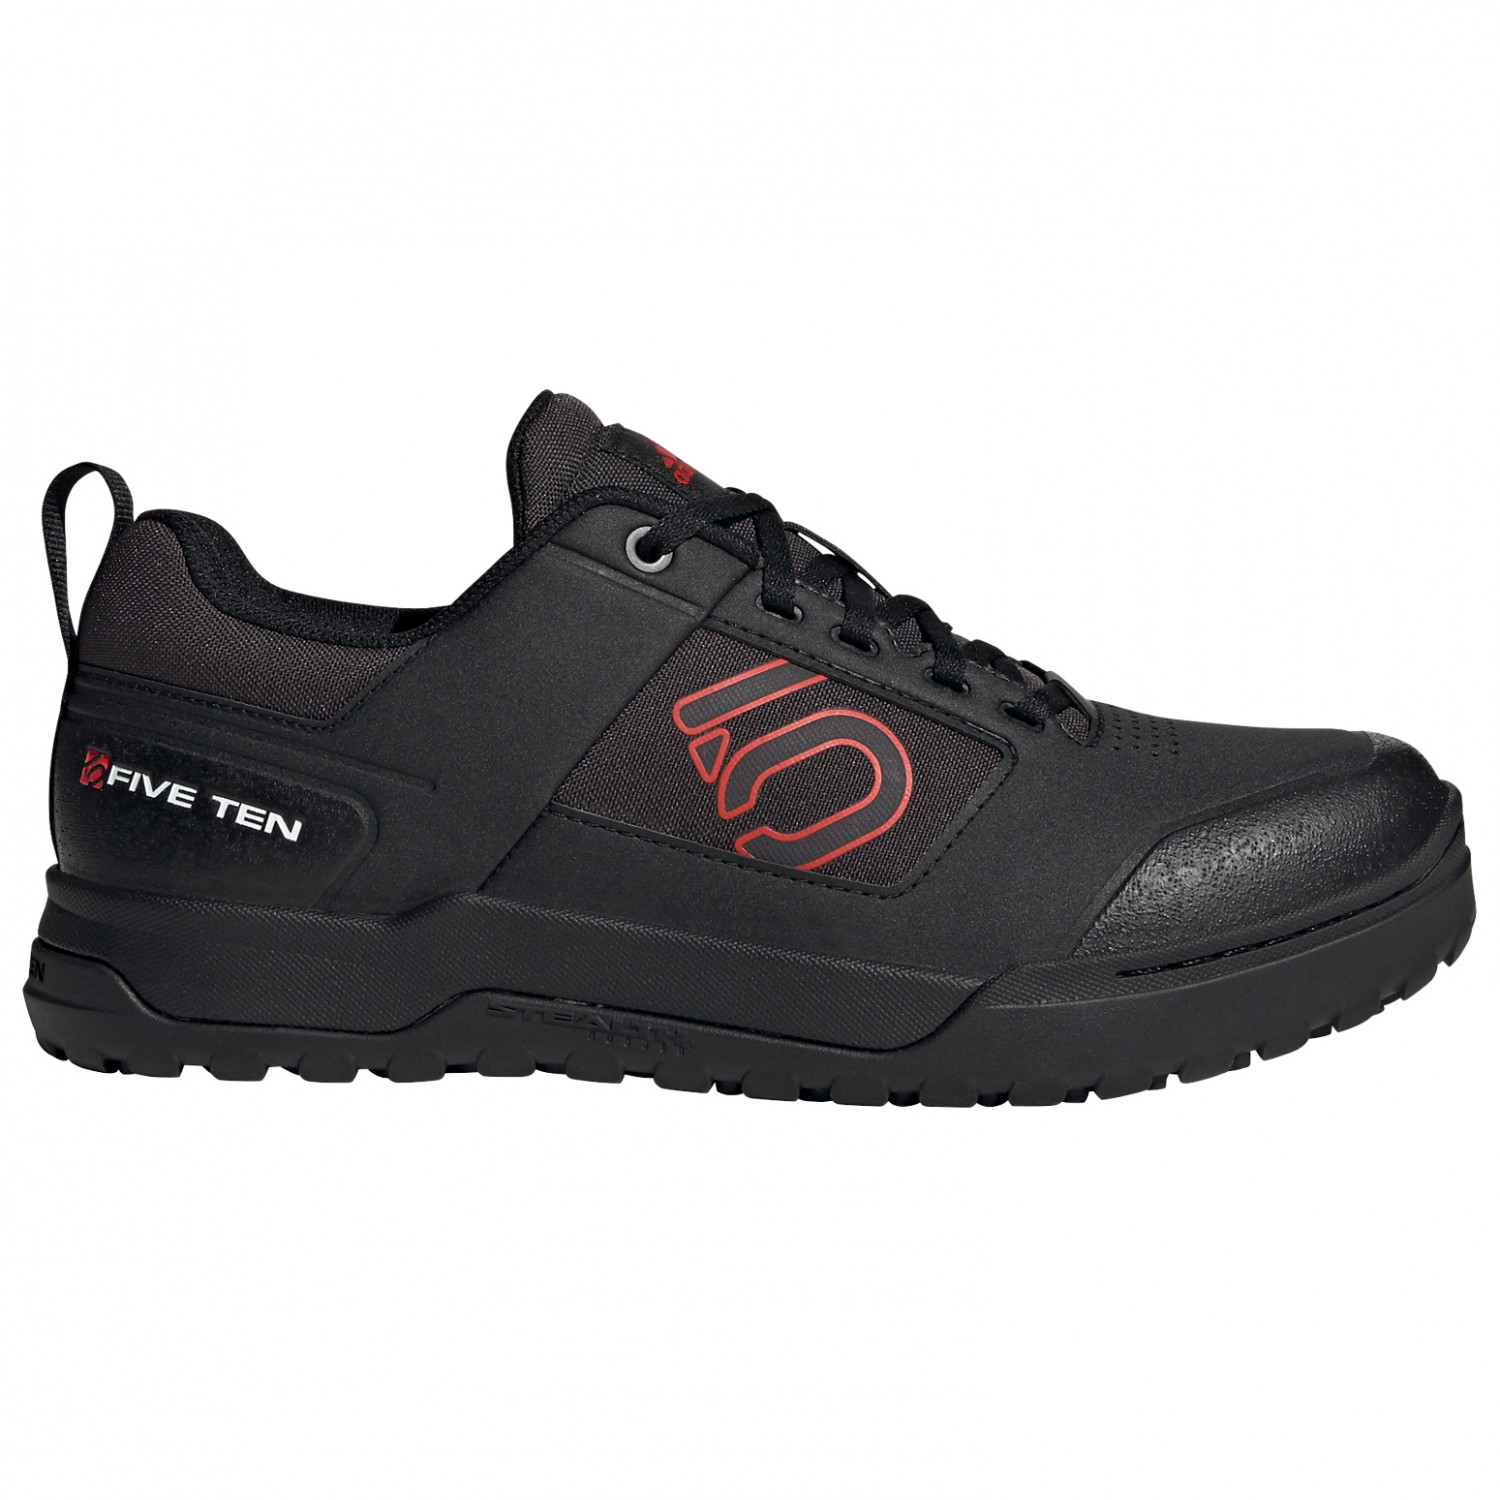 Велосипедная обувь Five Ten Impact Pro, цвет Core Black/Red/Ftwr White van gogh